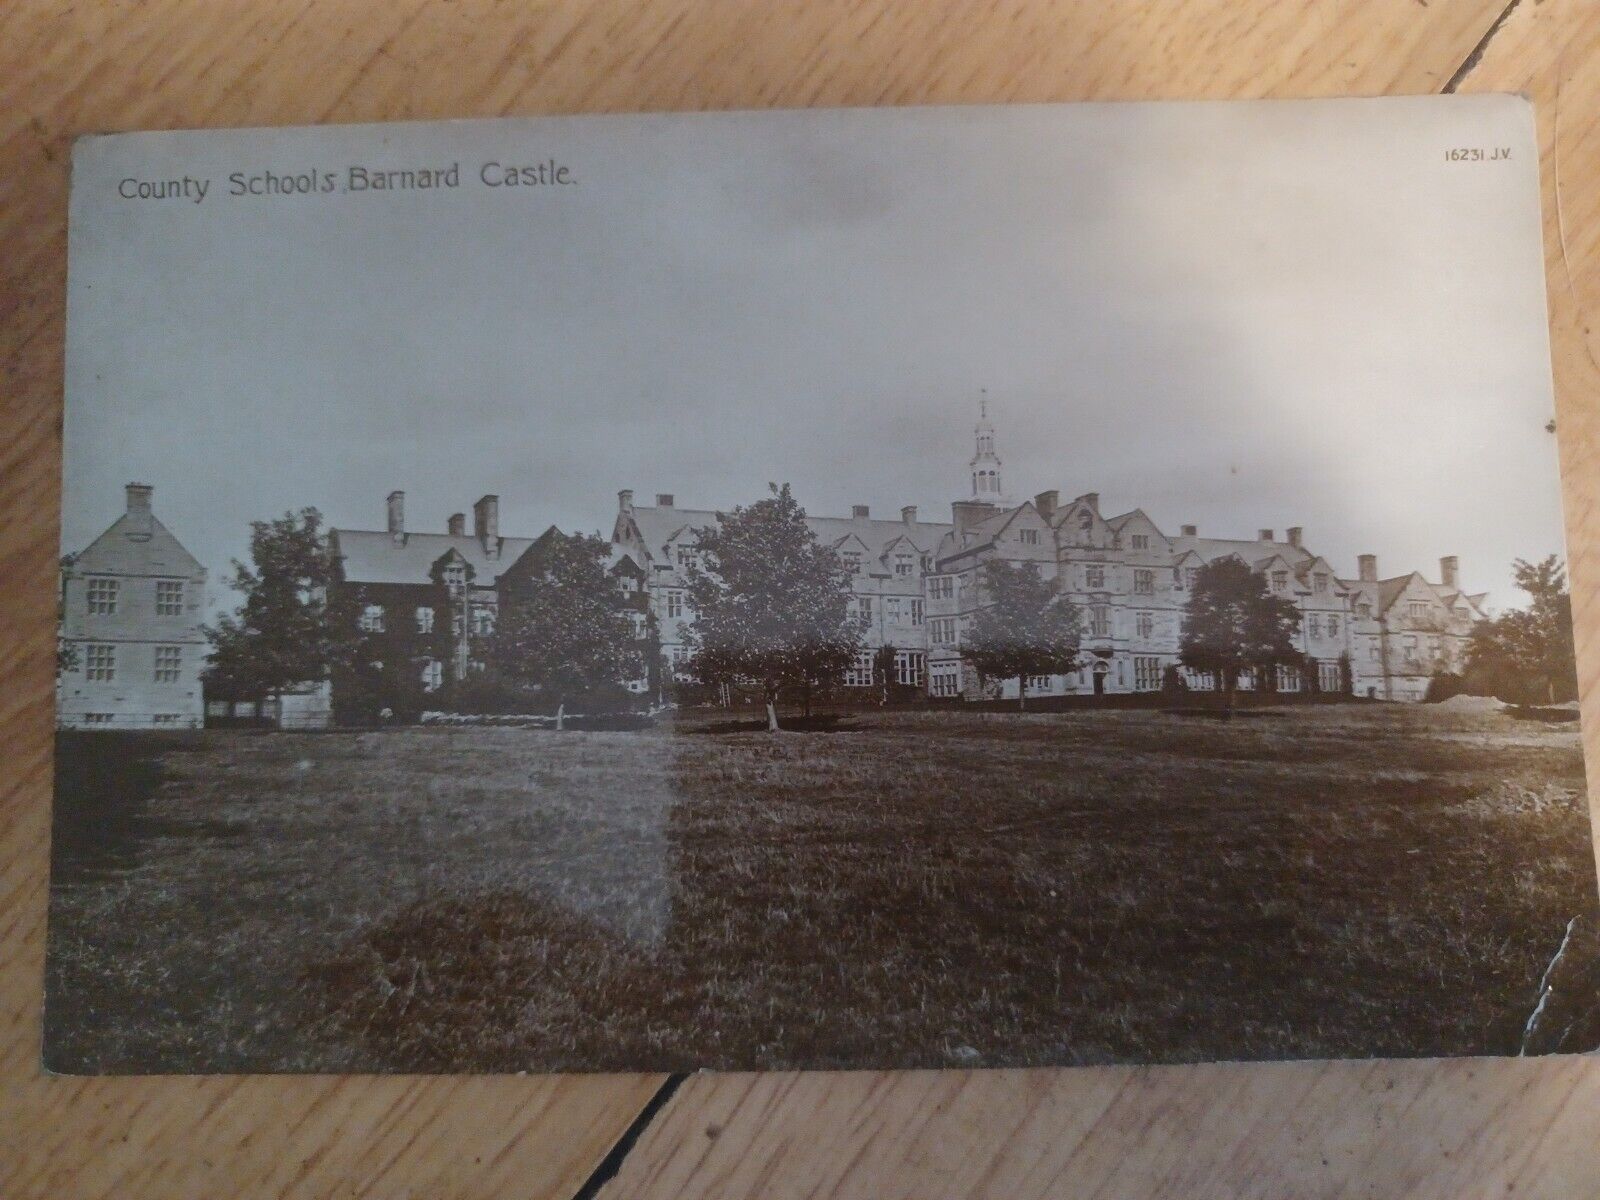 House Clearance - Vintage Service County Schools Barnard Castle